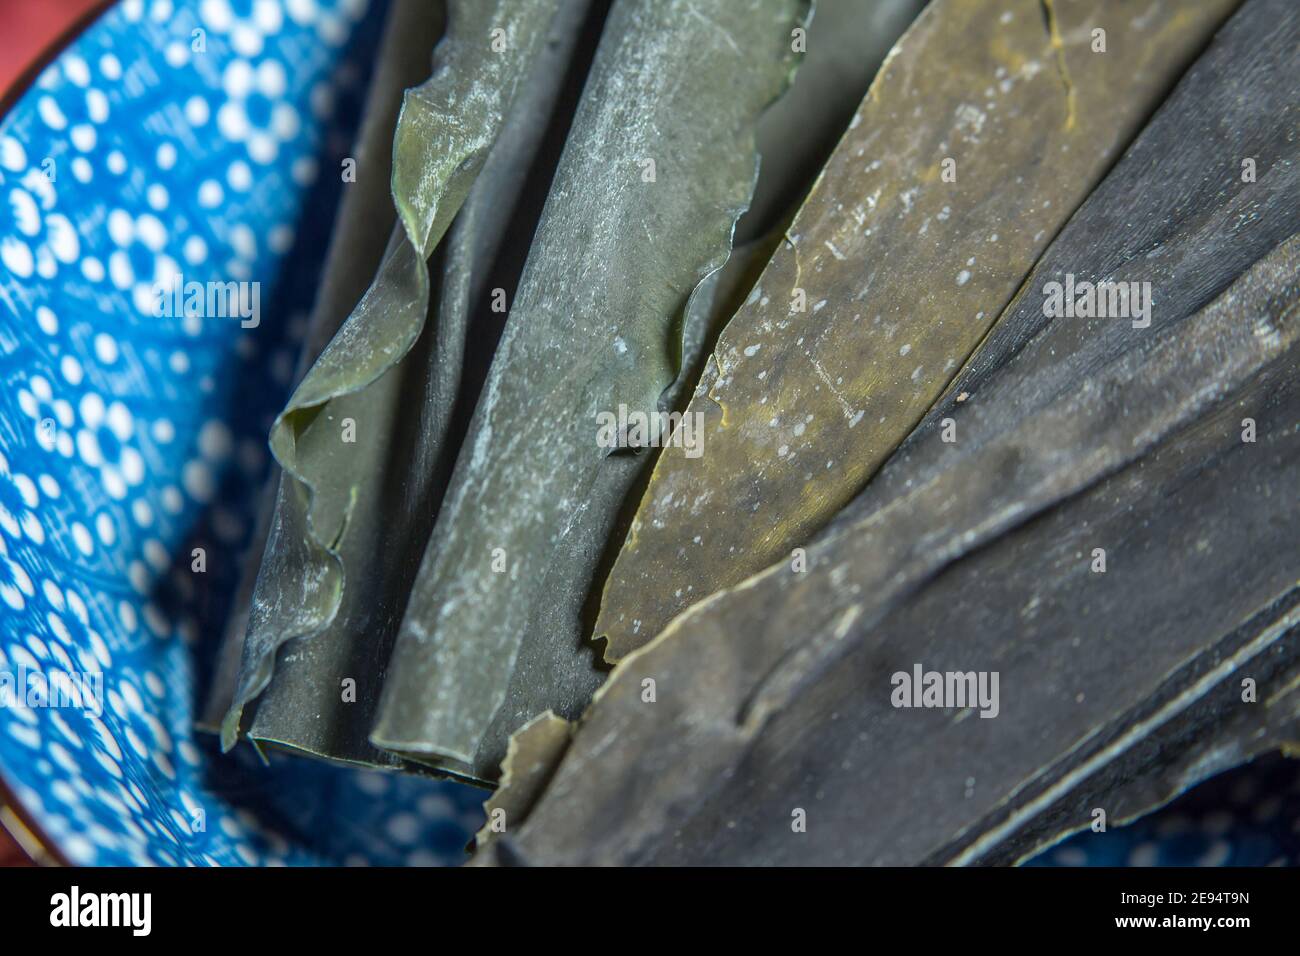 Japanese food, edible seaweed: kombu Stock Photo